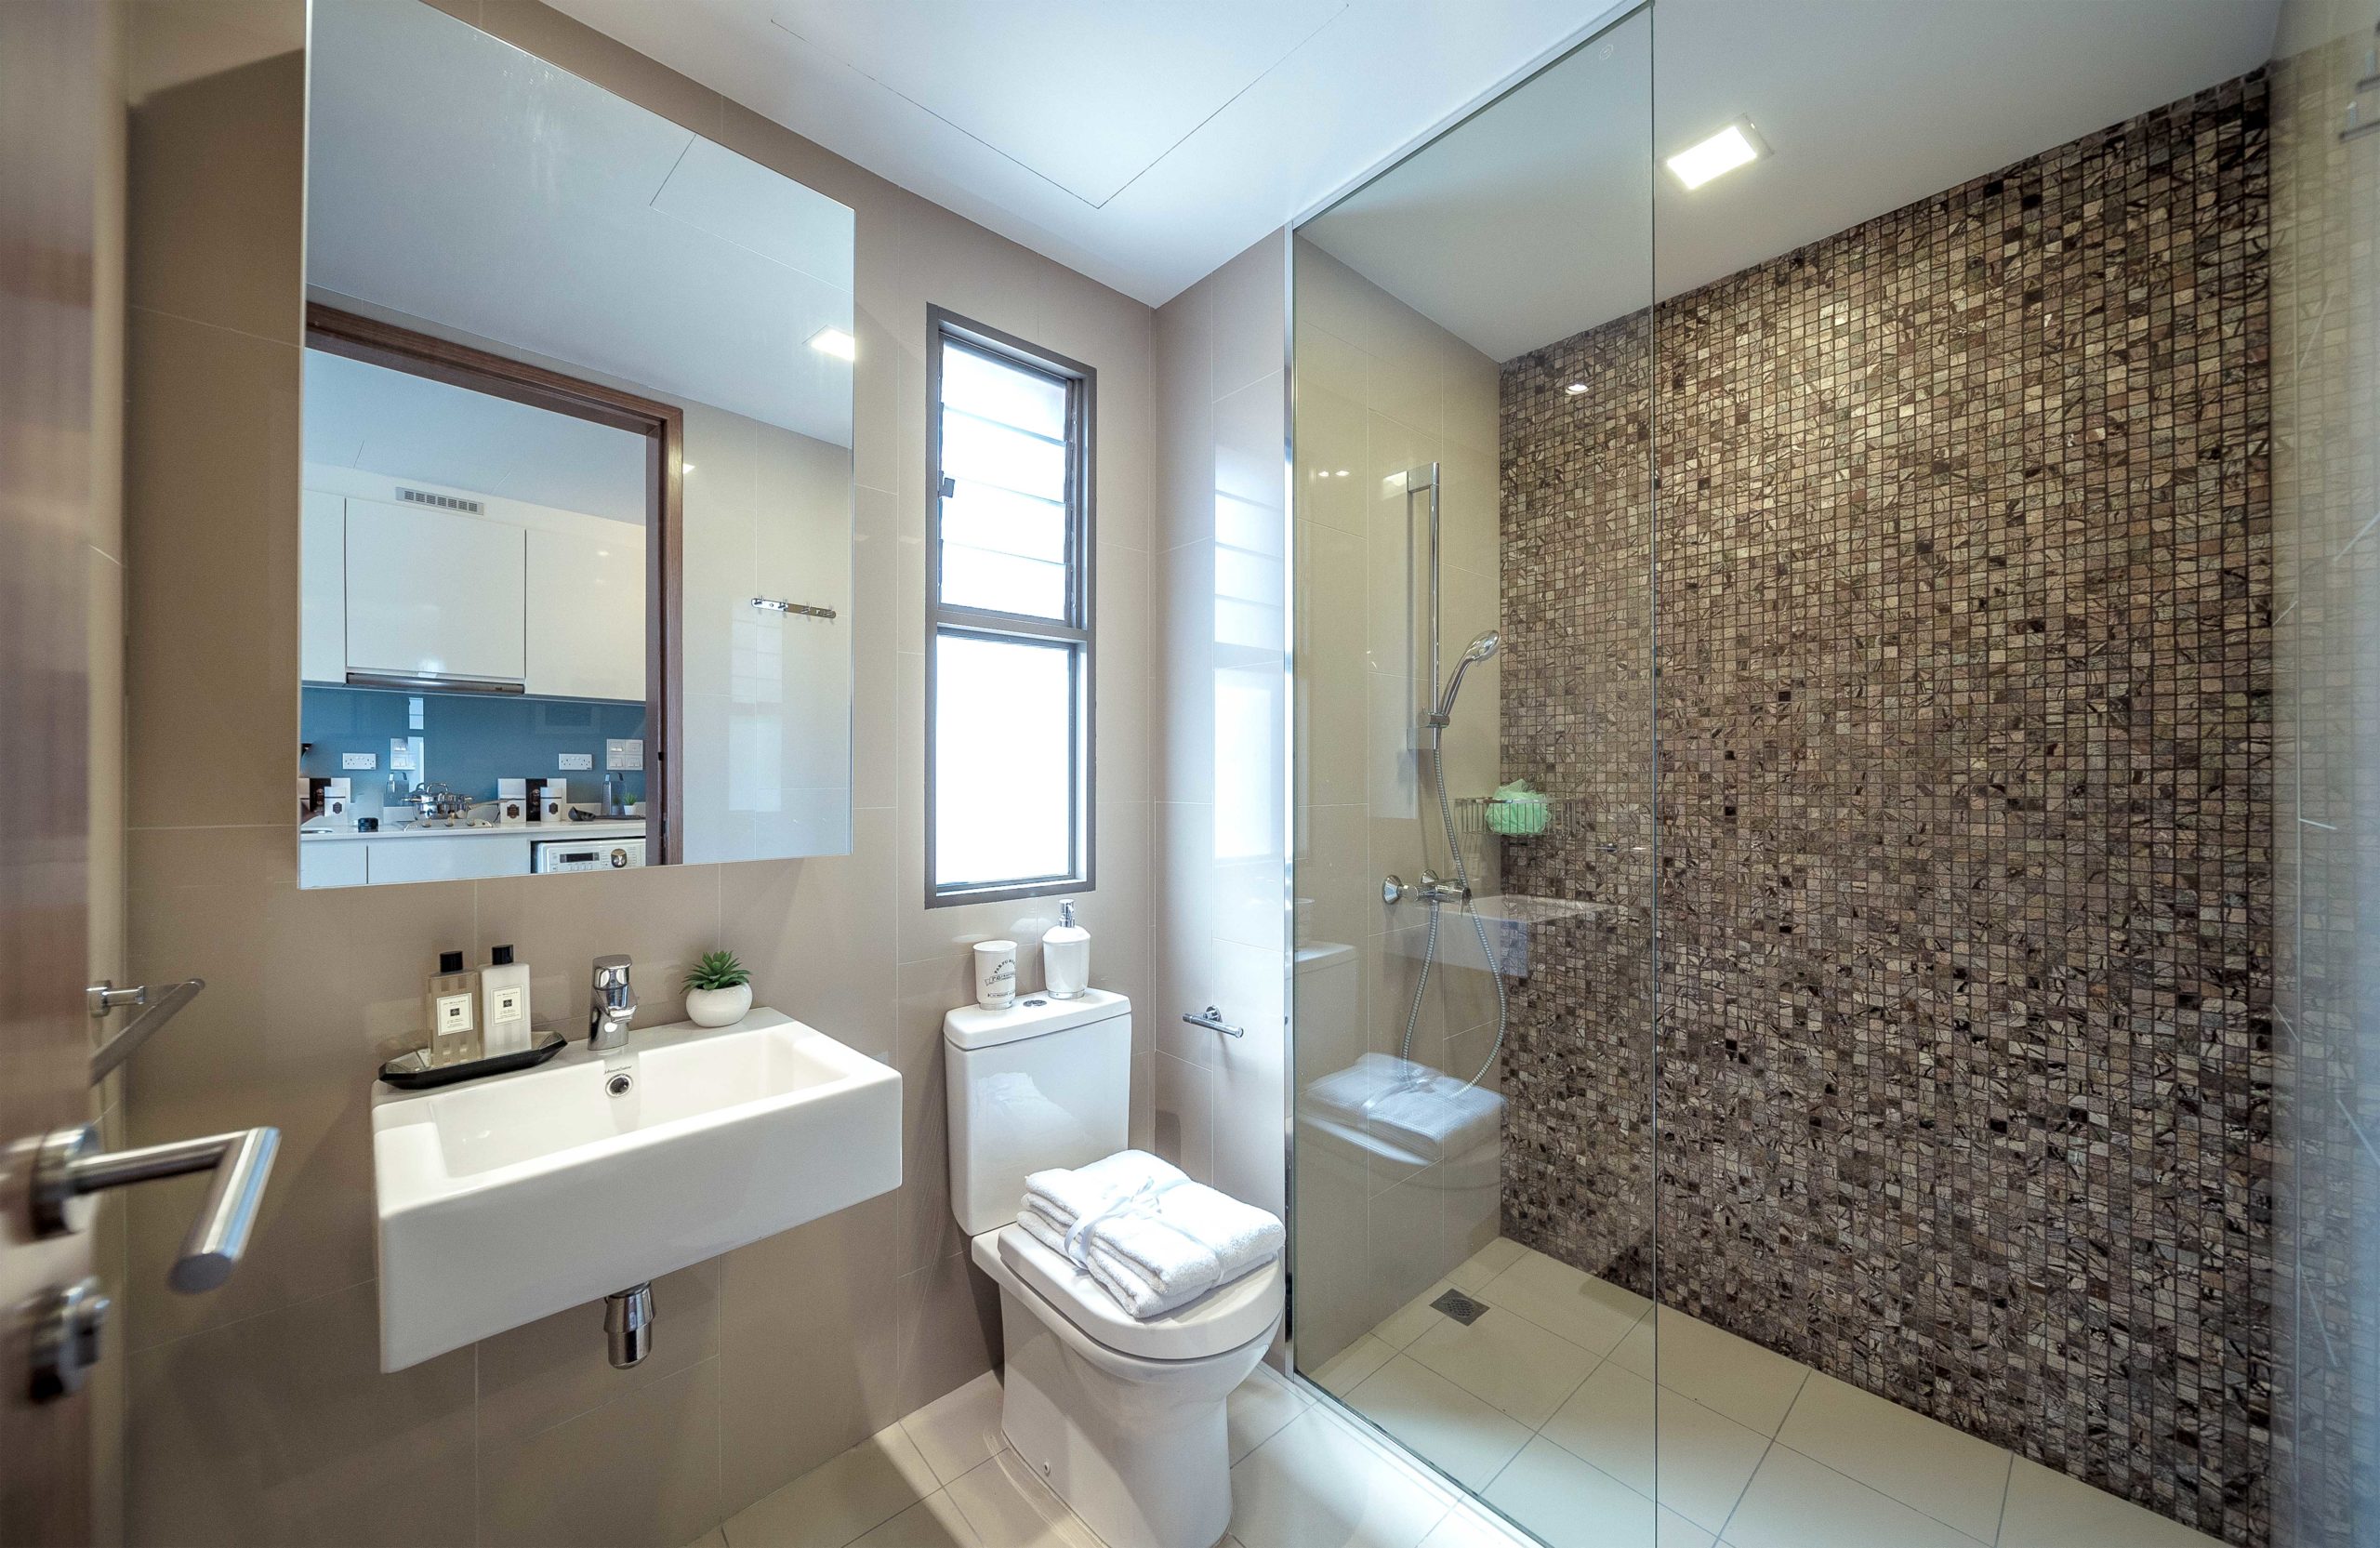 Luxury Toilet Interior Design with Bronze Reflective Tiles